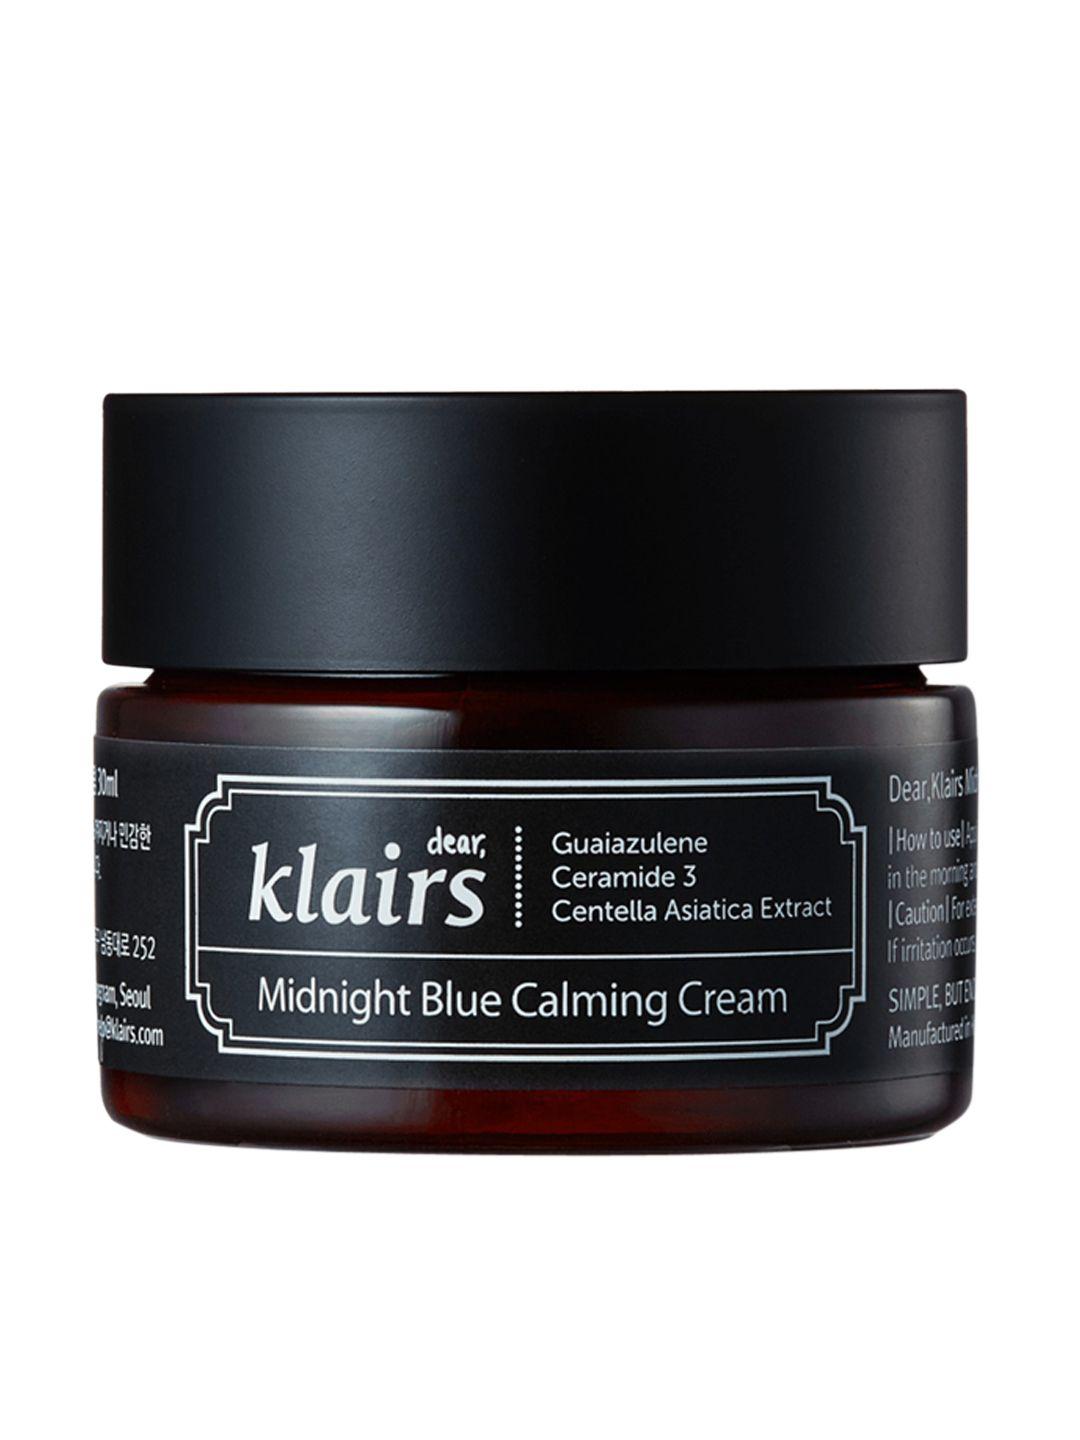 dear klairs midnight blue calming cream with guaiazulene for sensitive skin - 30ml